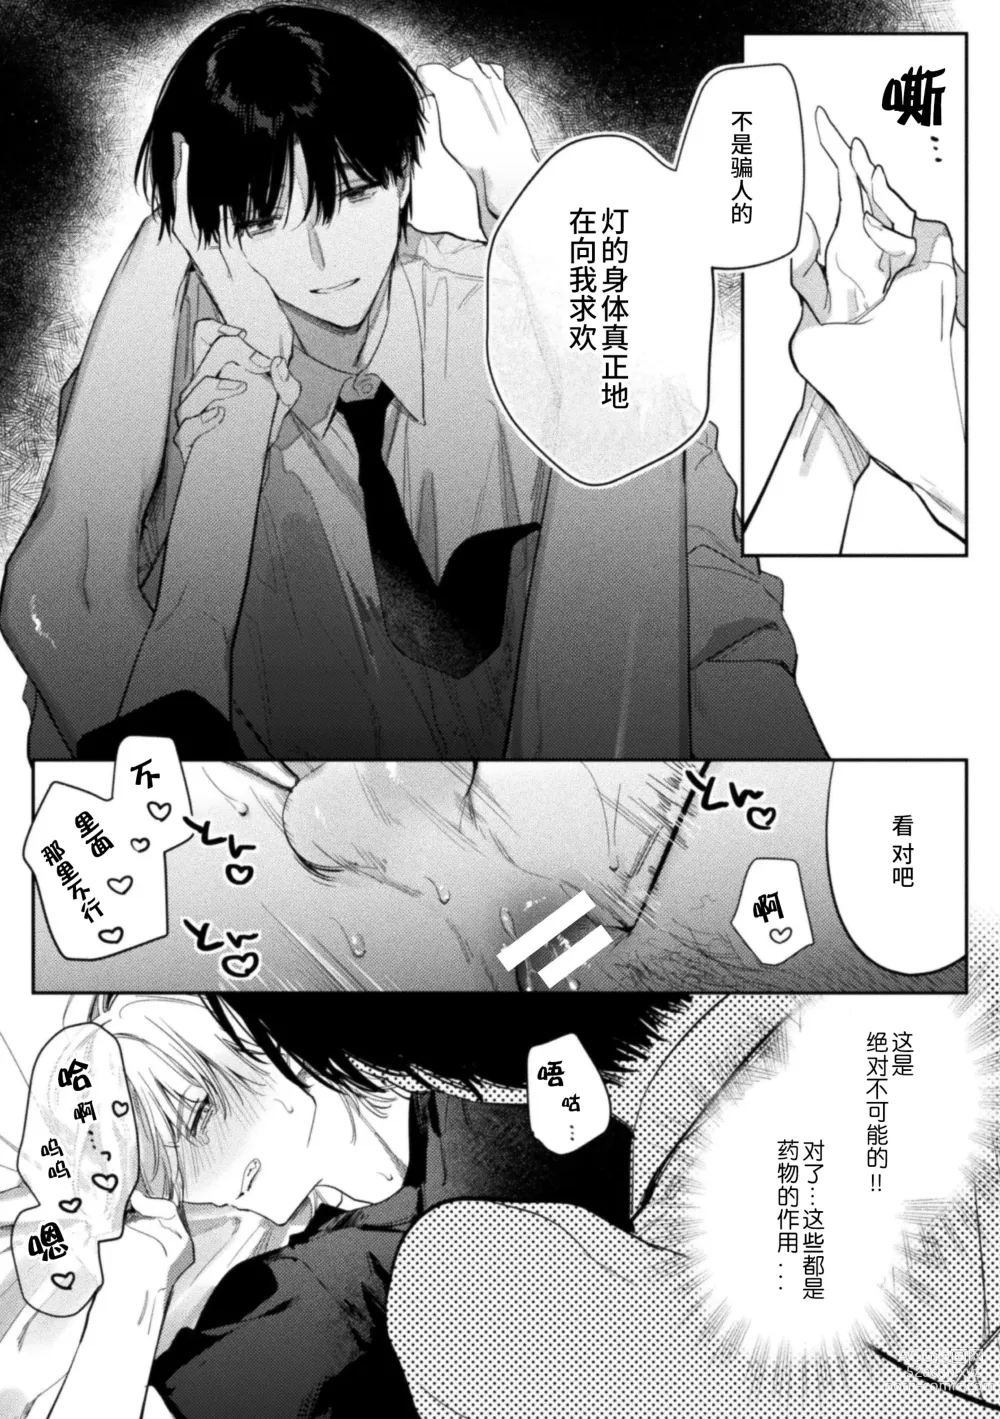 Page 17 of manga Kore ga Ainara xnde Kure Zenpen